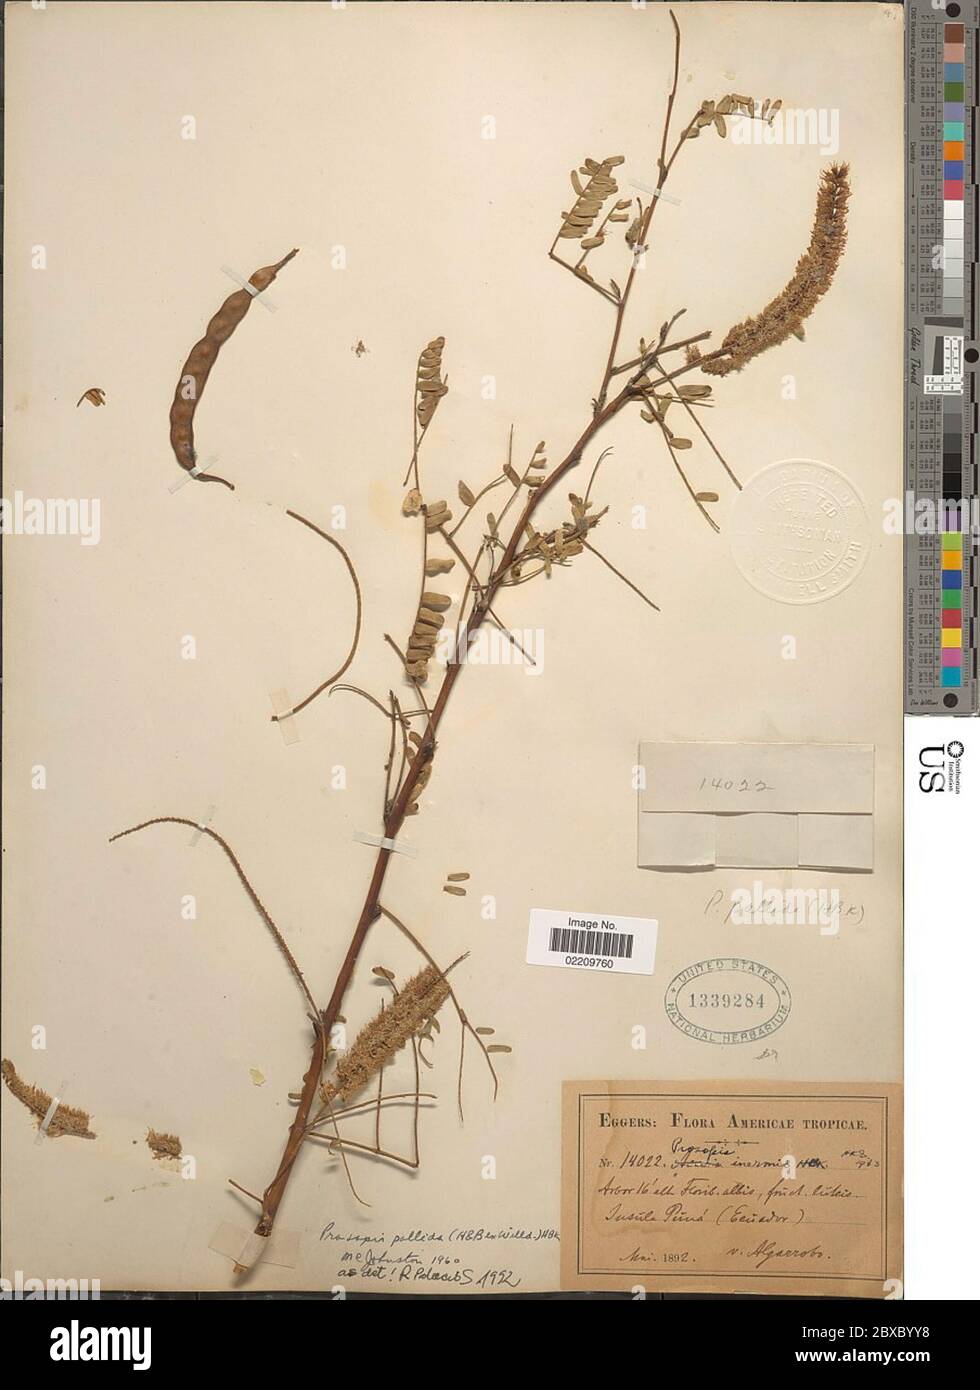 Prosopis pallida Humb Bonpl ex Willd Kunth Prosopis pallida Humb Bonpl ex Willd Kunth. Stock Photo